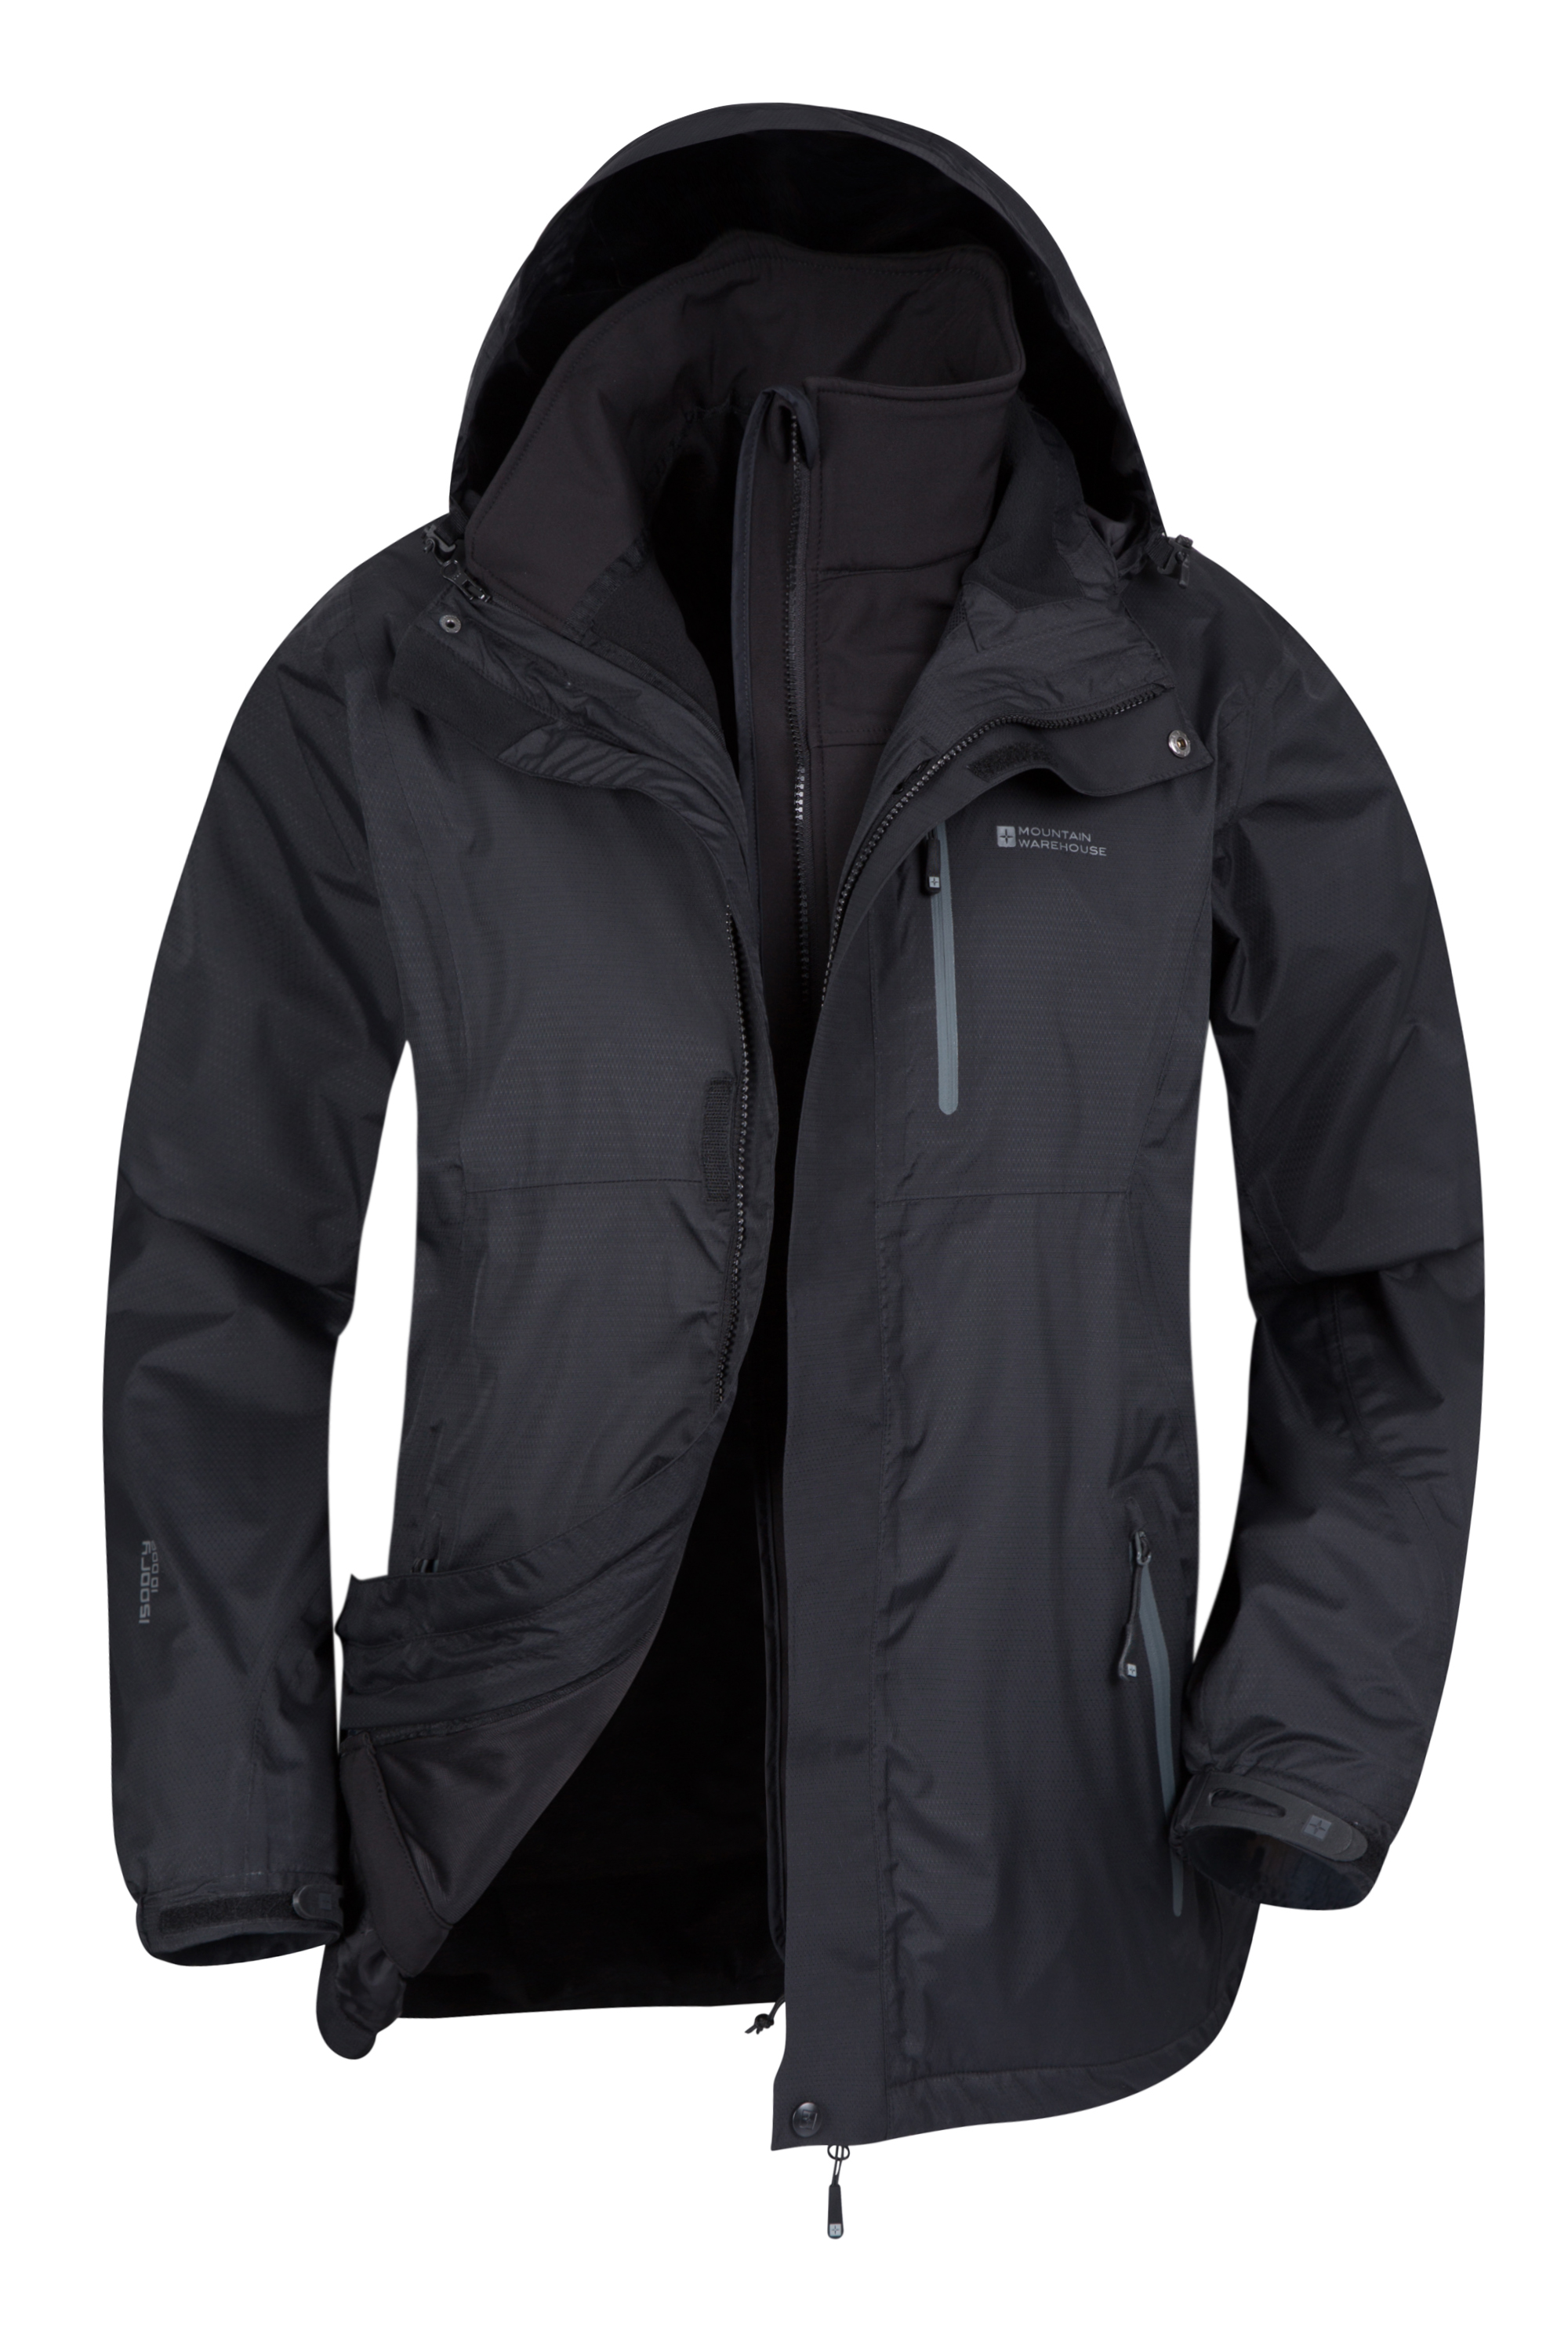 Mens Winter Jackets & Winter Coats | Mountain Warehouse GB